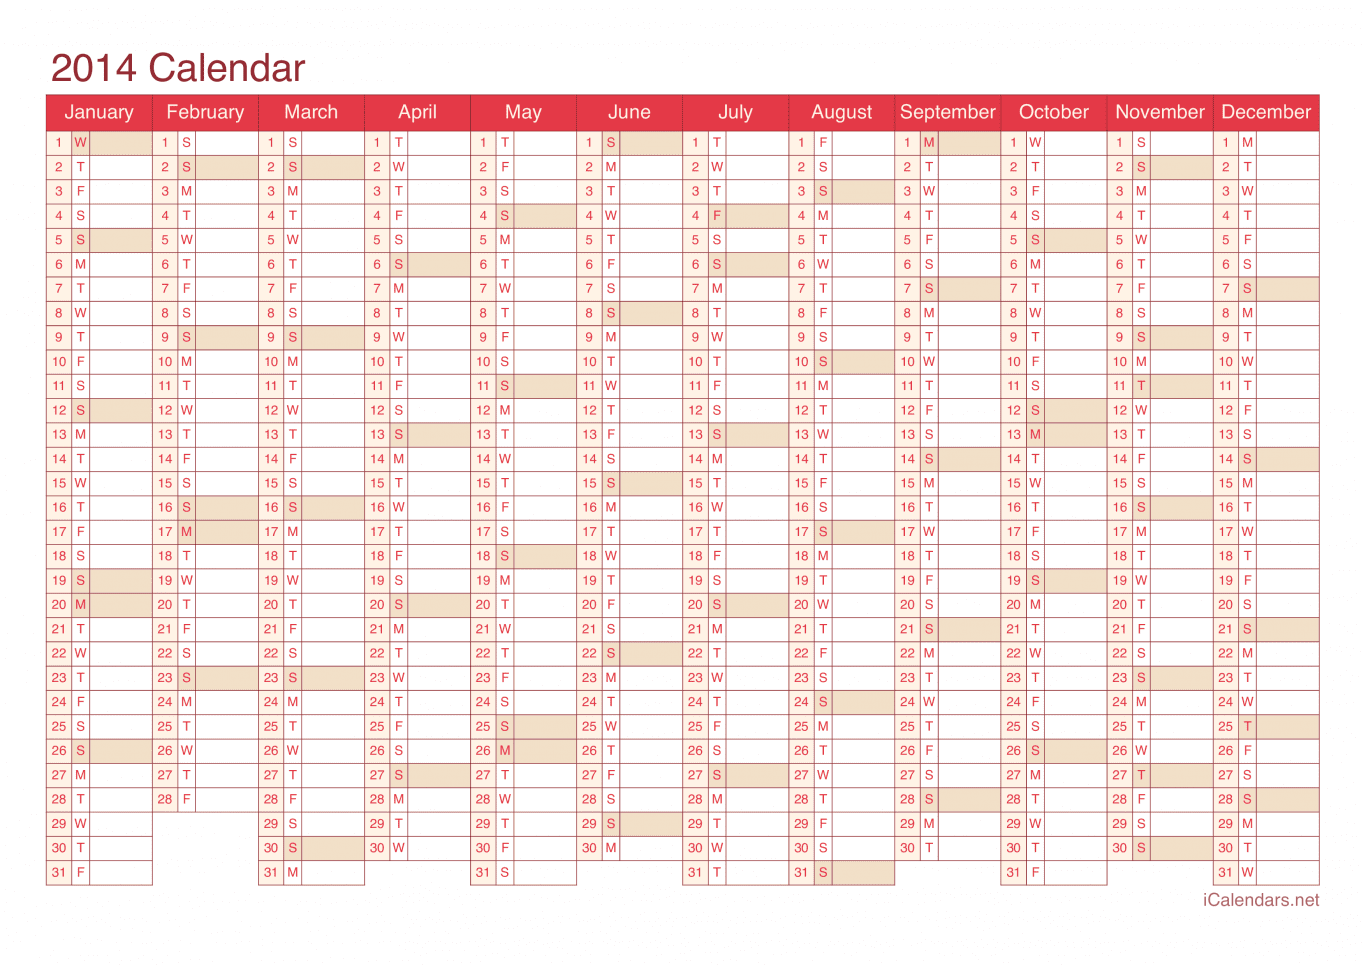 2014 Calendar - Cherry